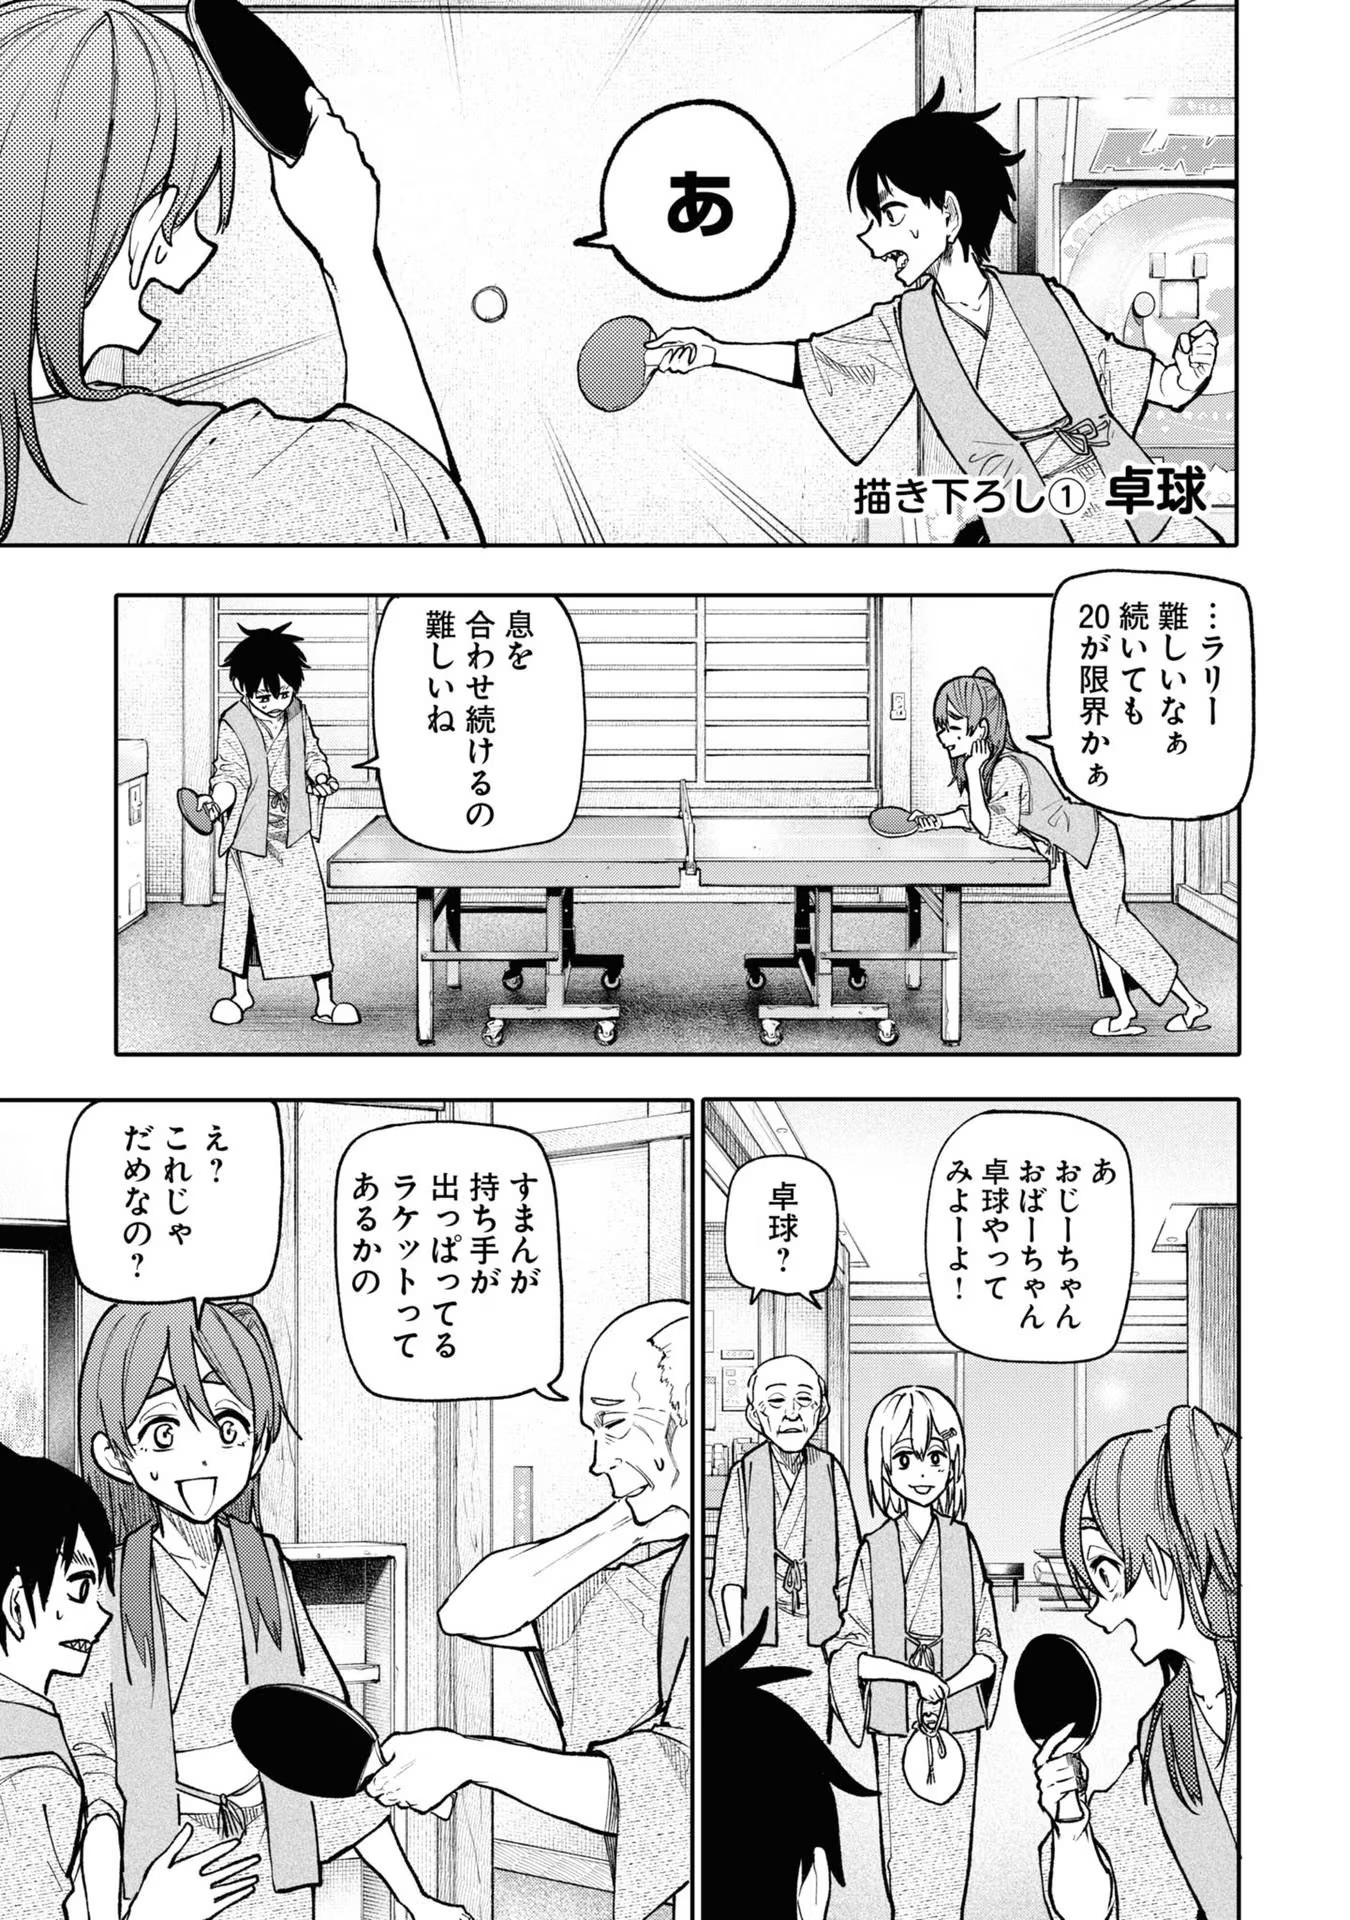 Ojii-san to Obaa-san ga Wakigaetta Hanashi - Chapter 108.5 - Page 1